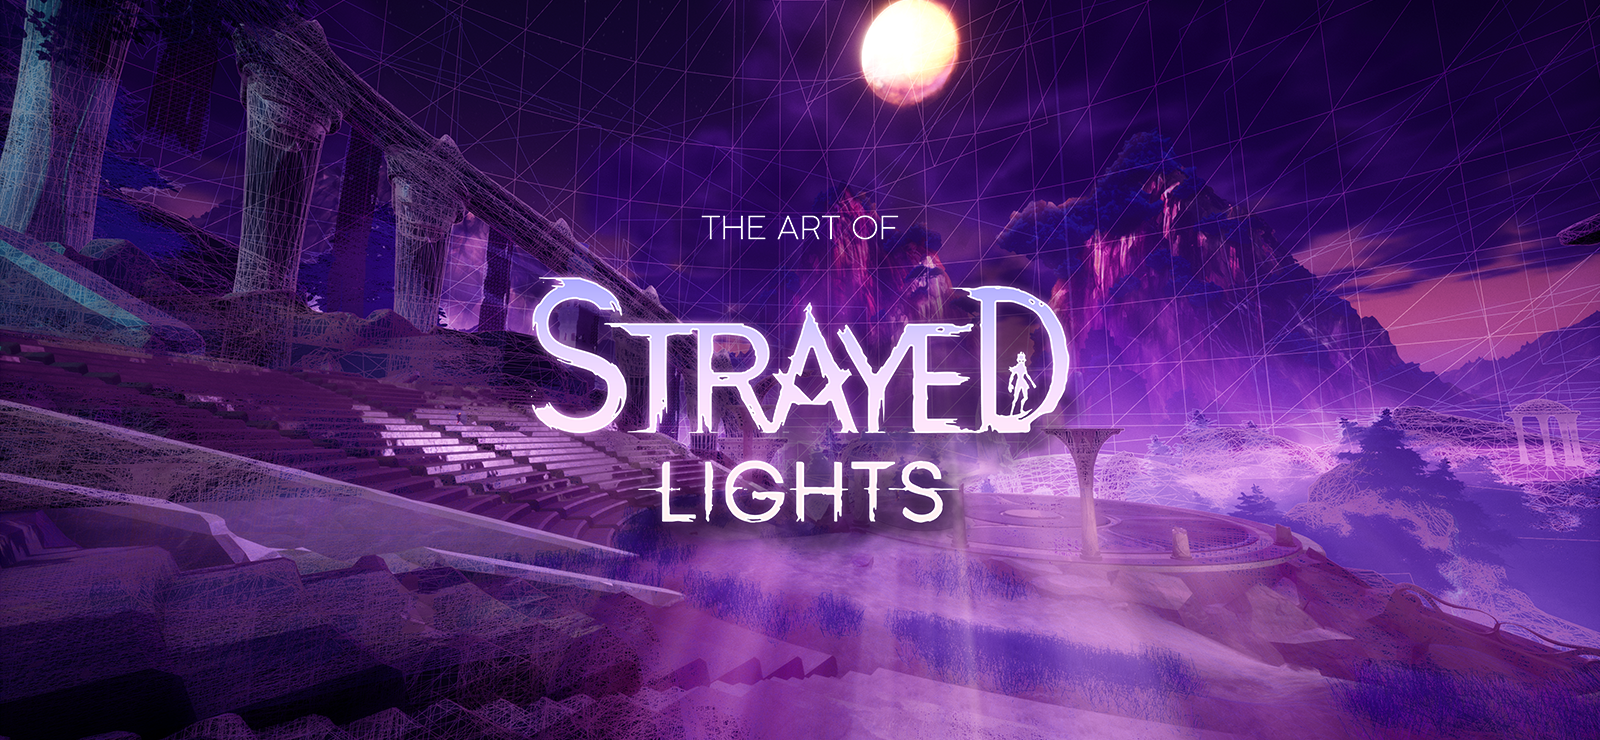 Strayed Lights - Digital Art Book